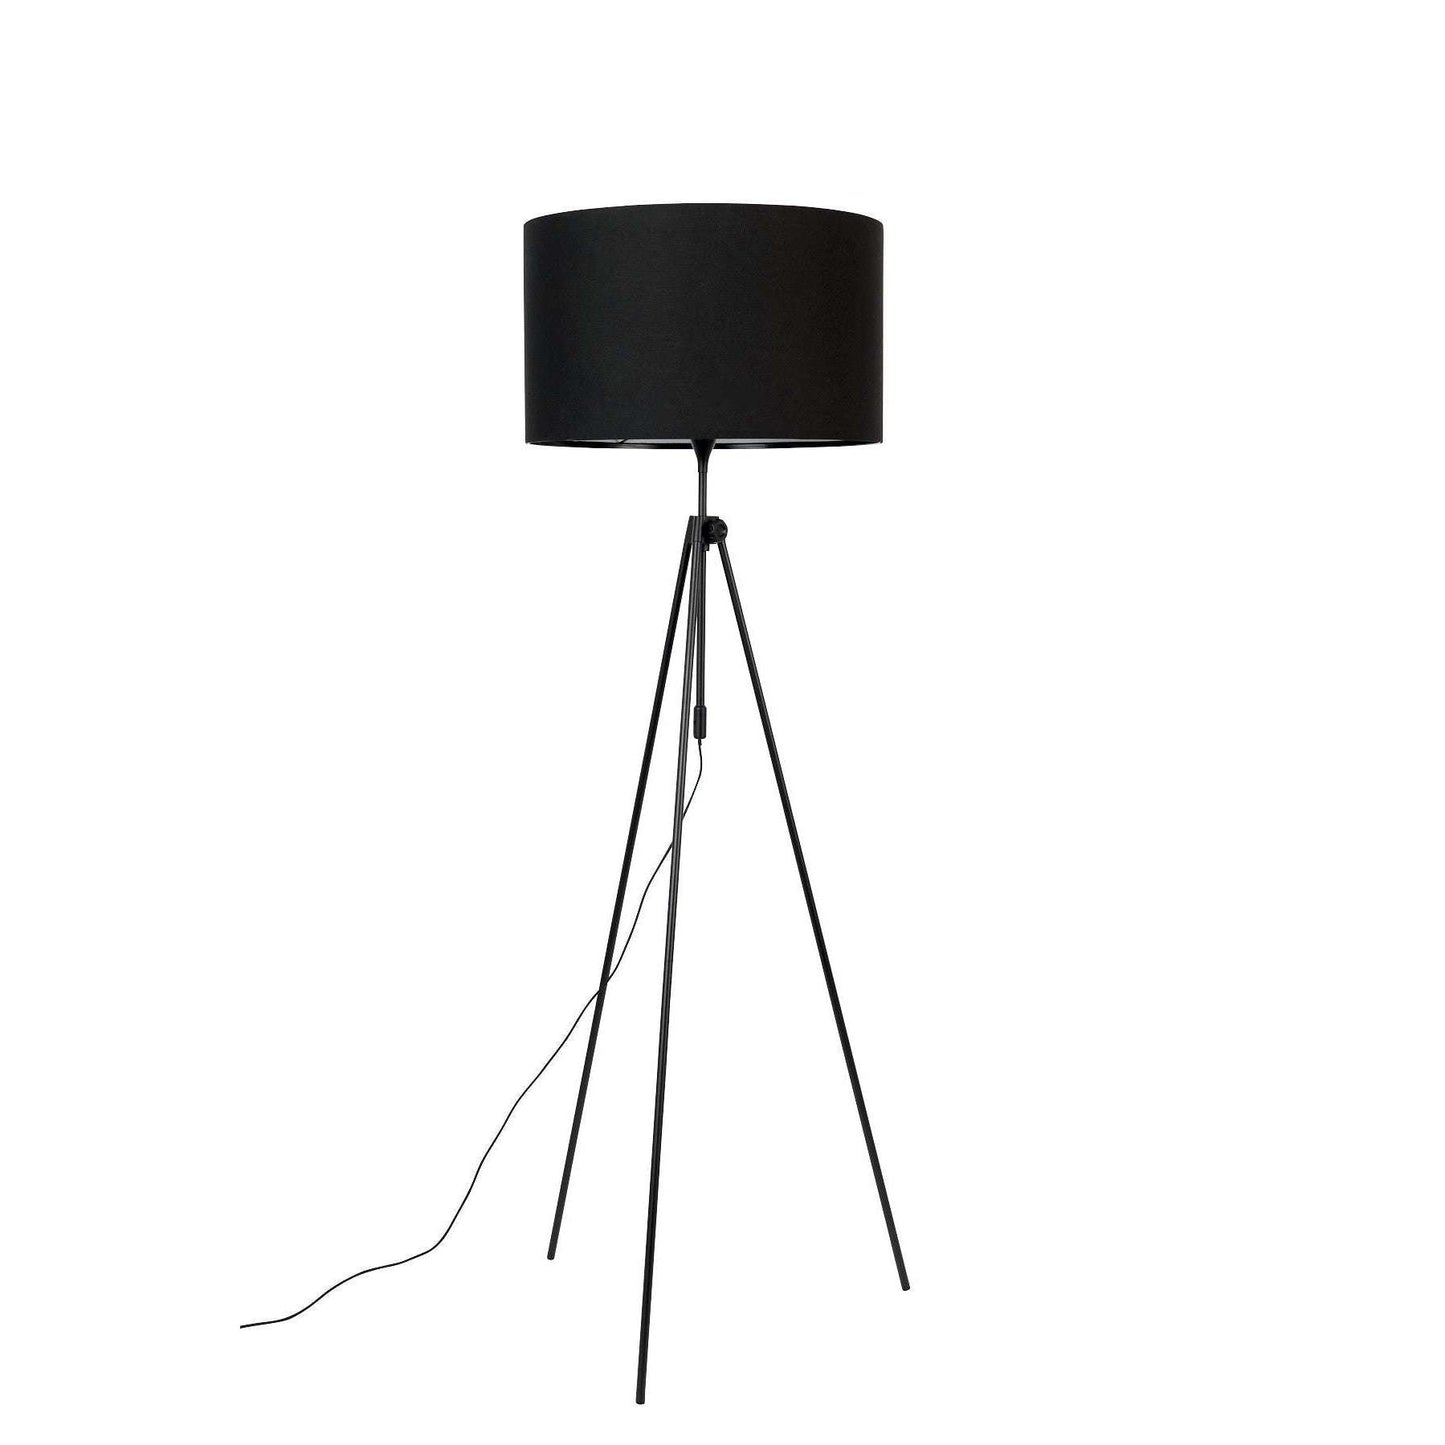 Zuiver vloerlamp lesley zwart Ø183 x 153 - 181 cm